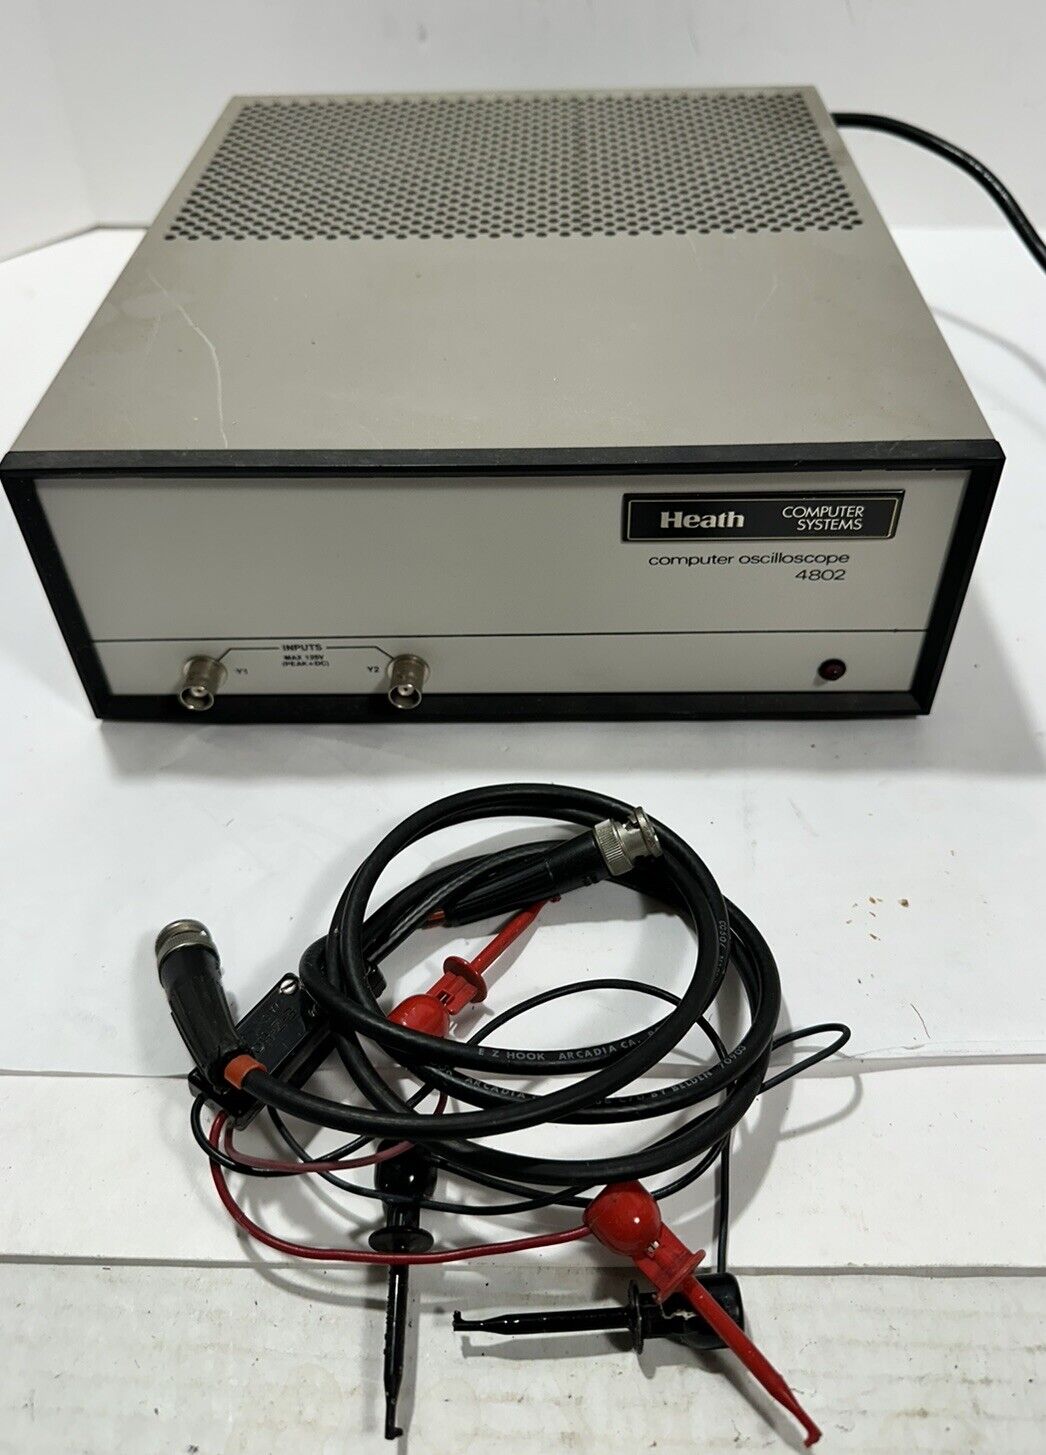 Vintage Healthkit 4802 Computer Oscilloscope Heath Computer Systems